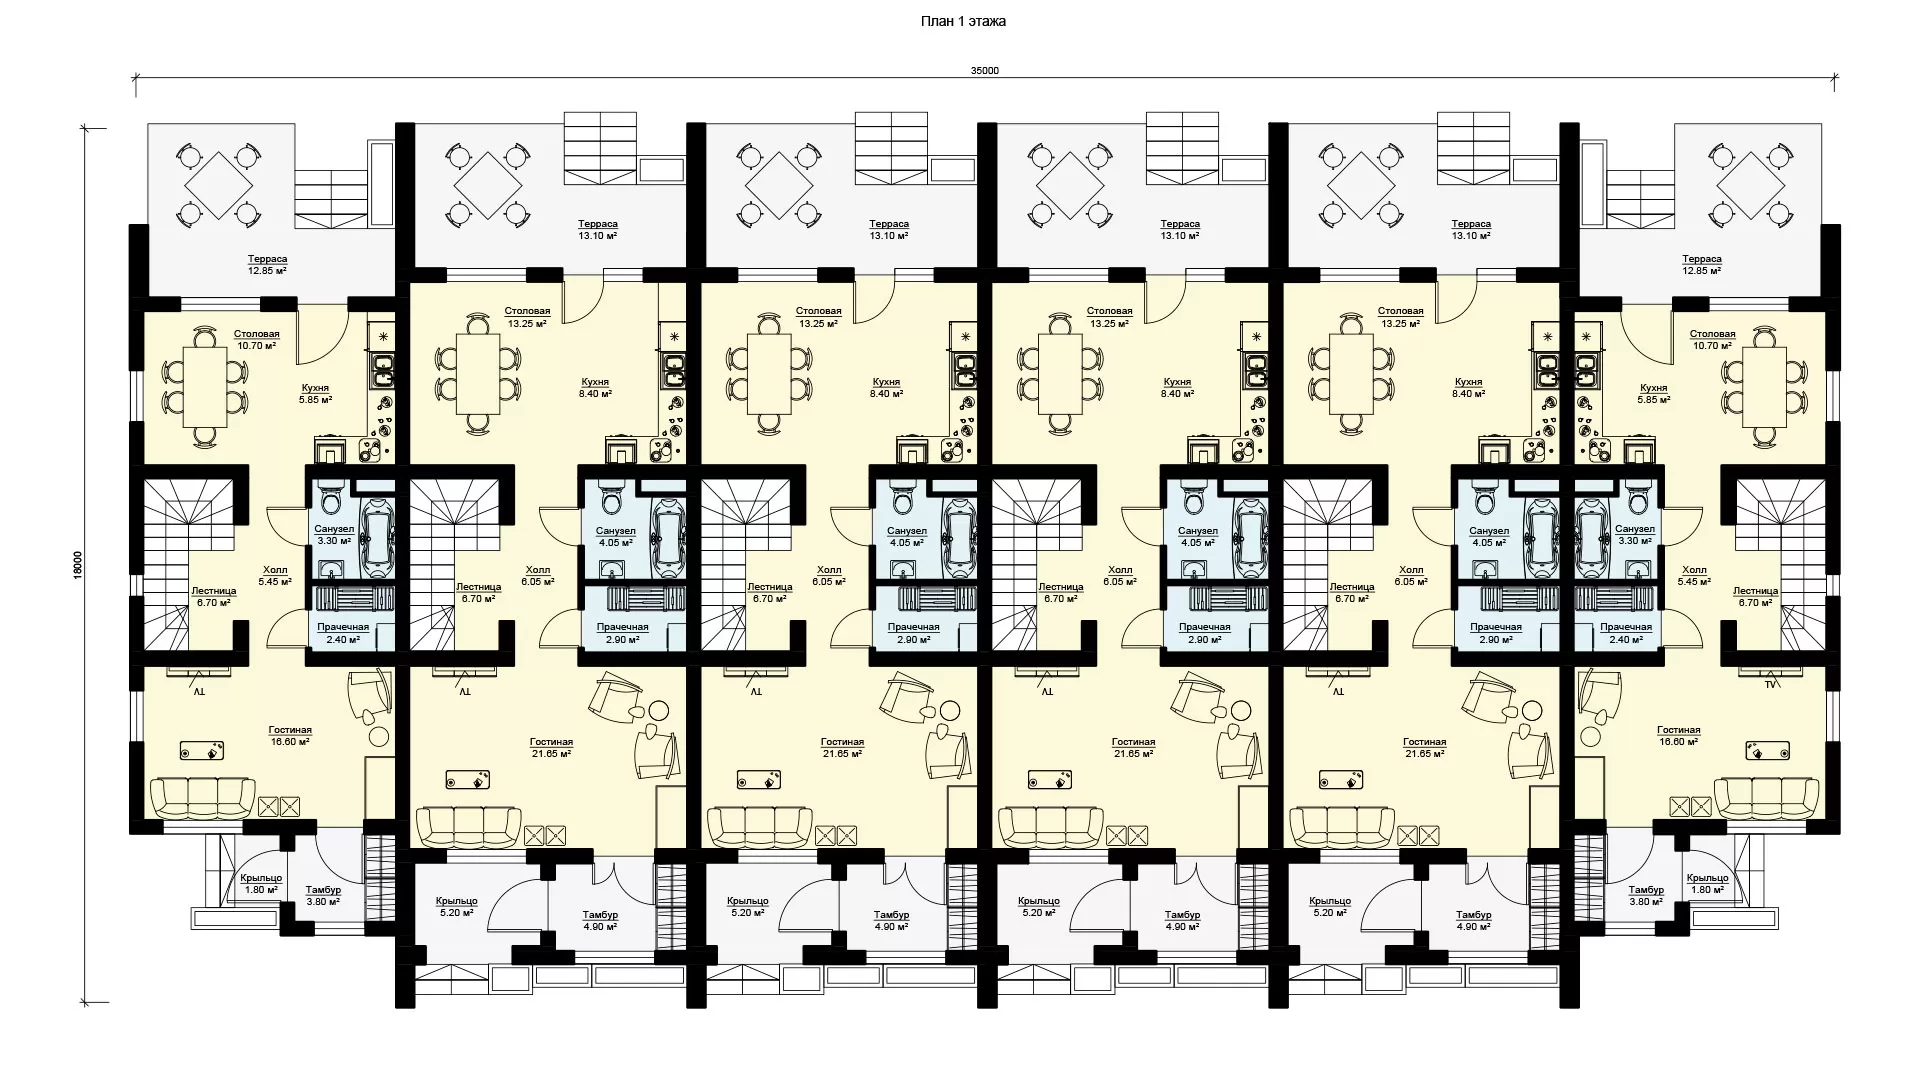 План первого этажа таунхауса из шести двухэтажных квартир, проект БЭНПАН МС-1145